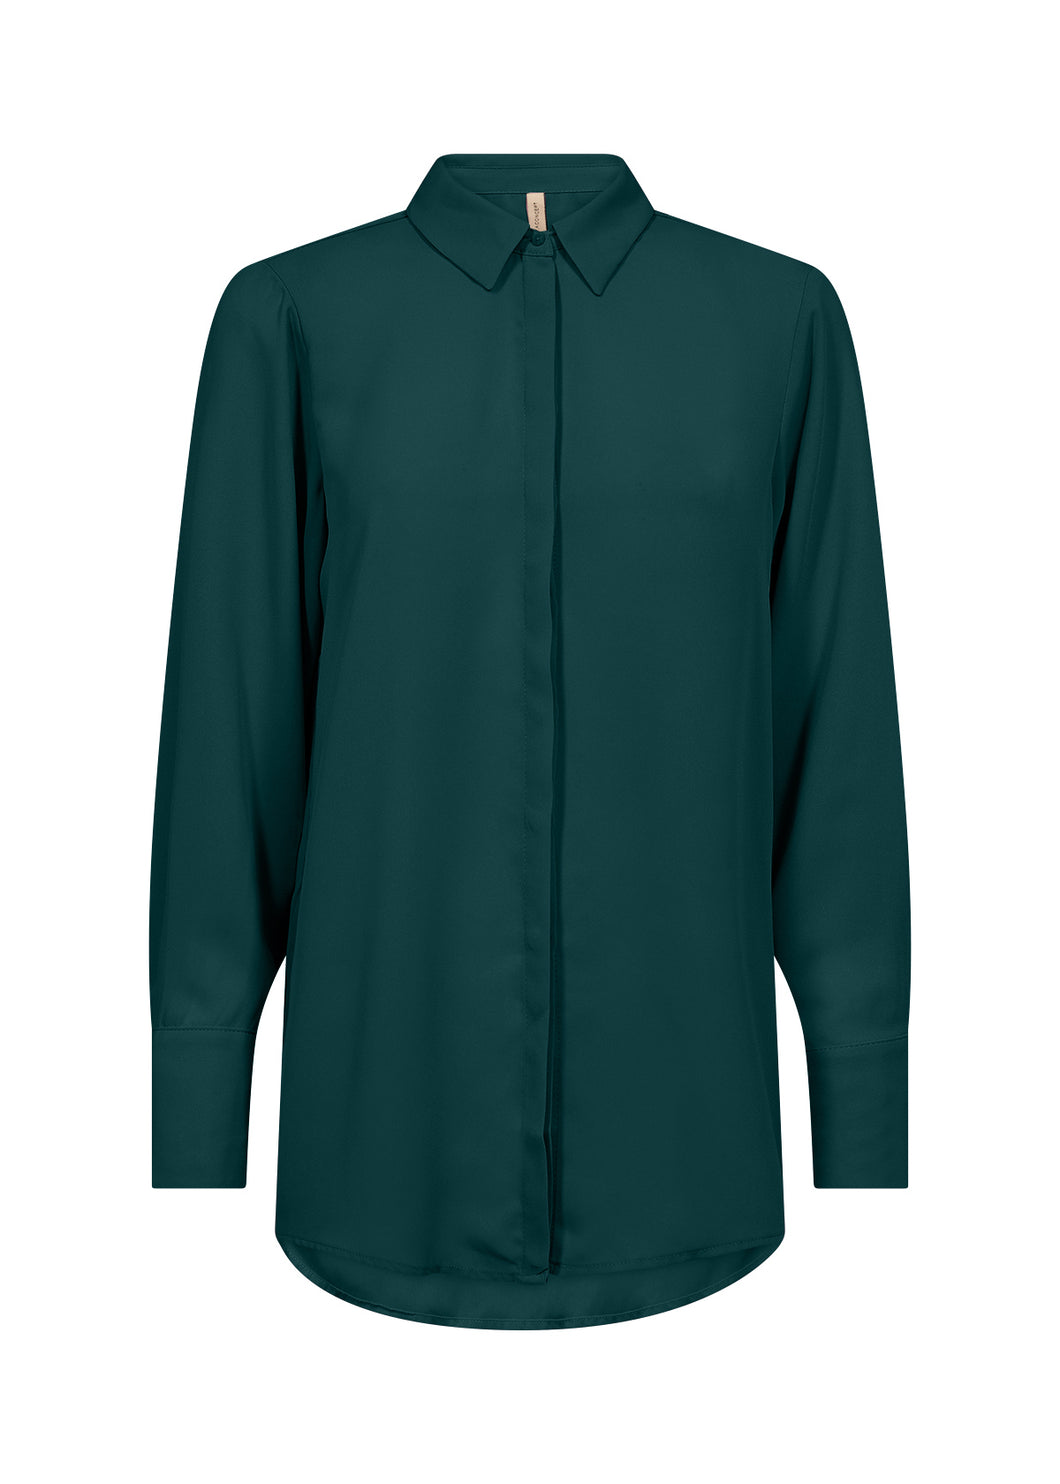 Soya Concept Long Sleeve Blouse - Style 40396